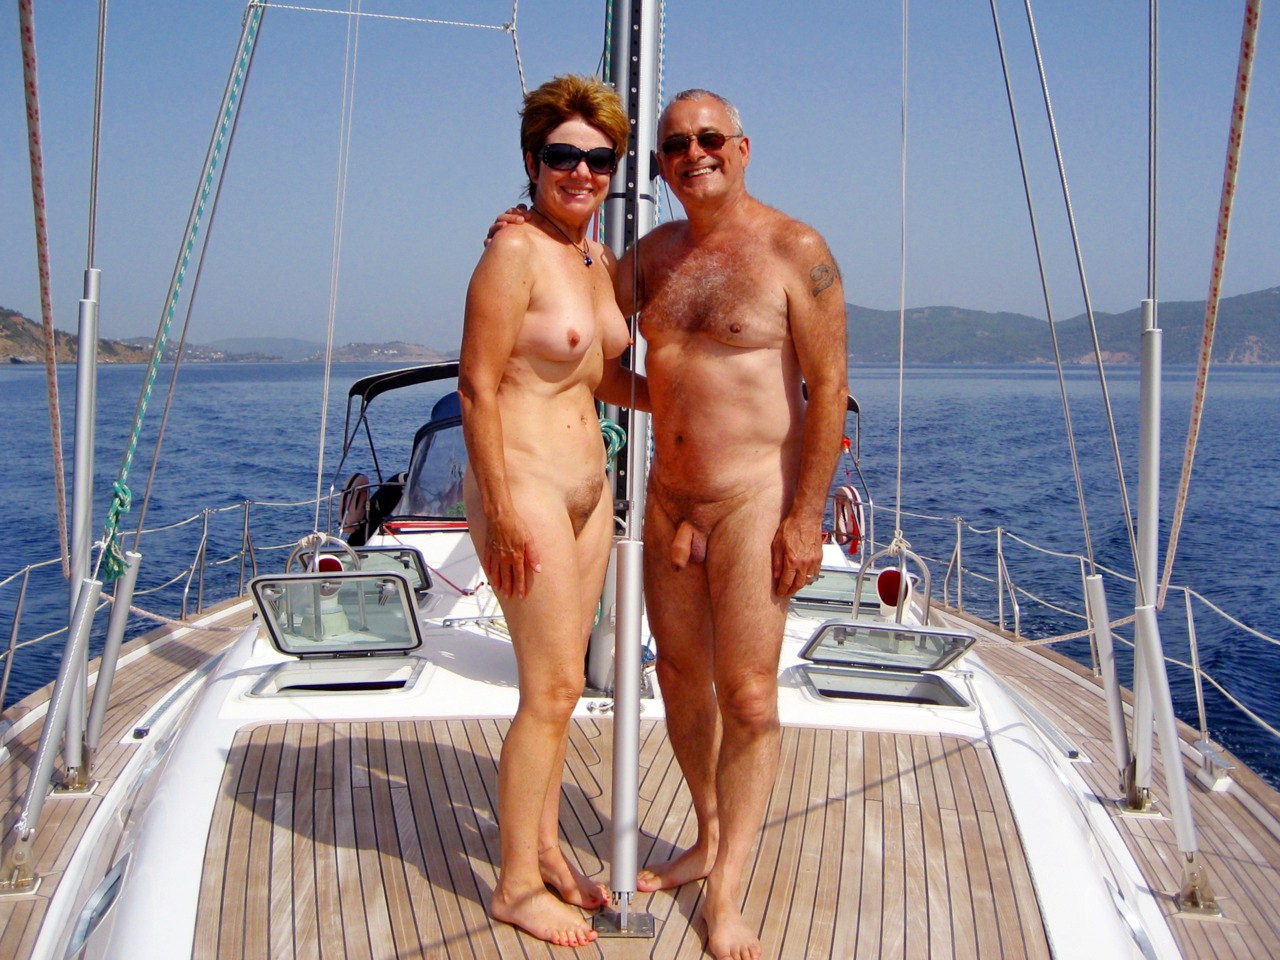 https://www.nudismlife.com/galleries/nudists_and_nude/nudists_couple/nudists_nude_naturists_couple_0654.jpg